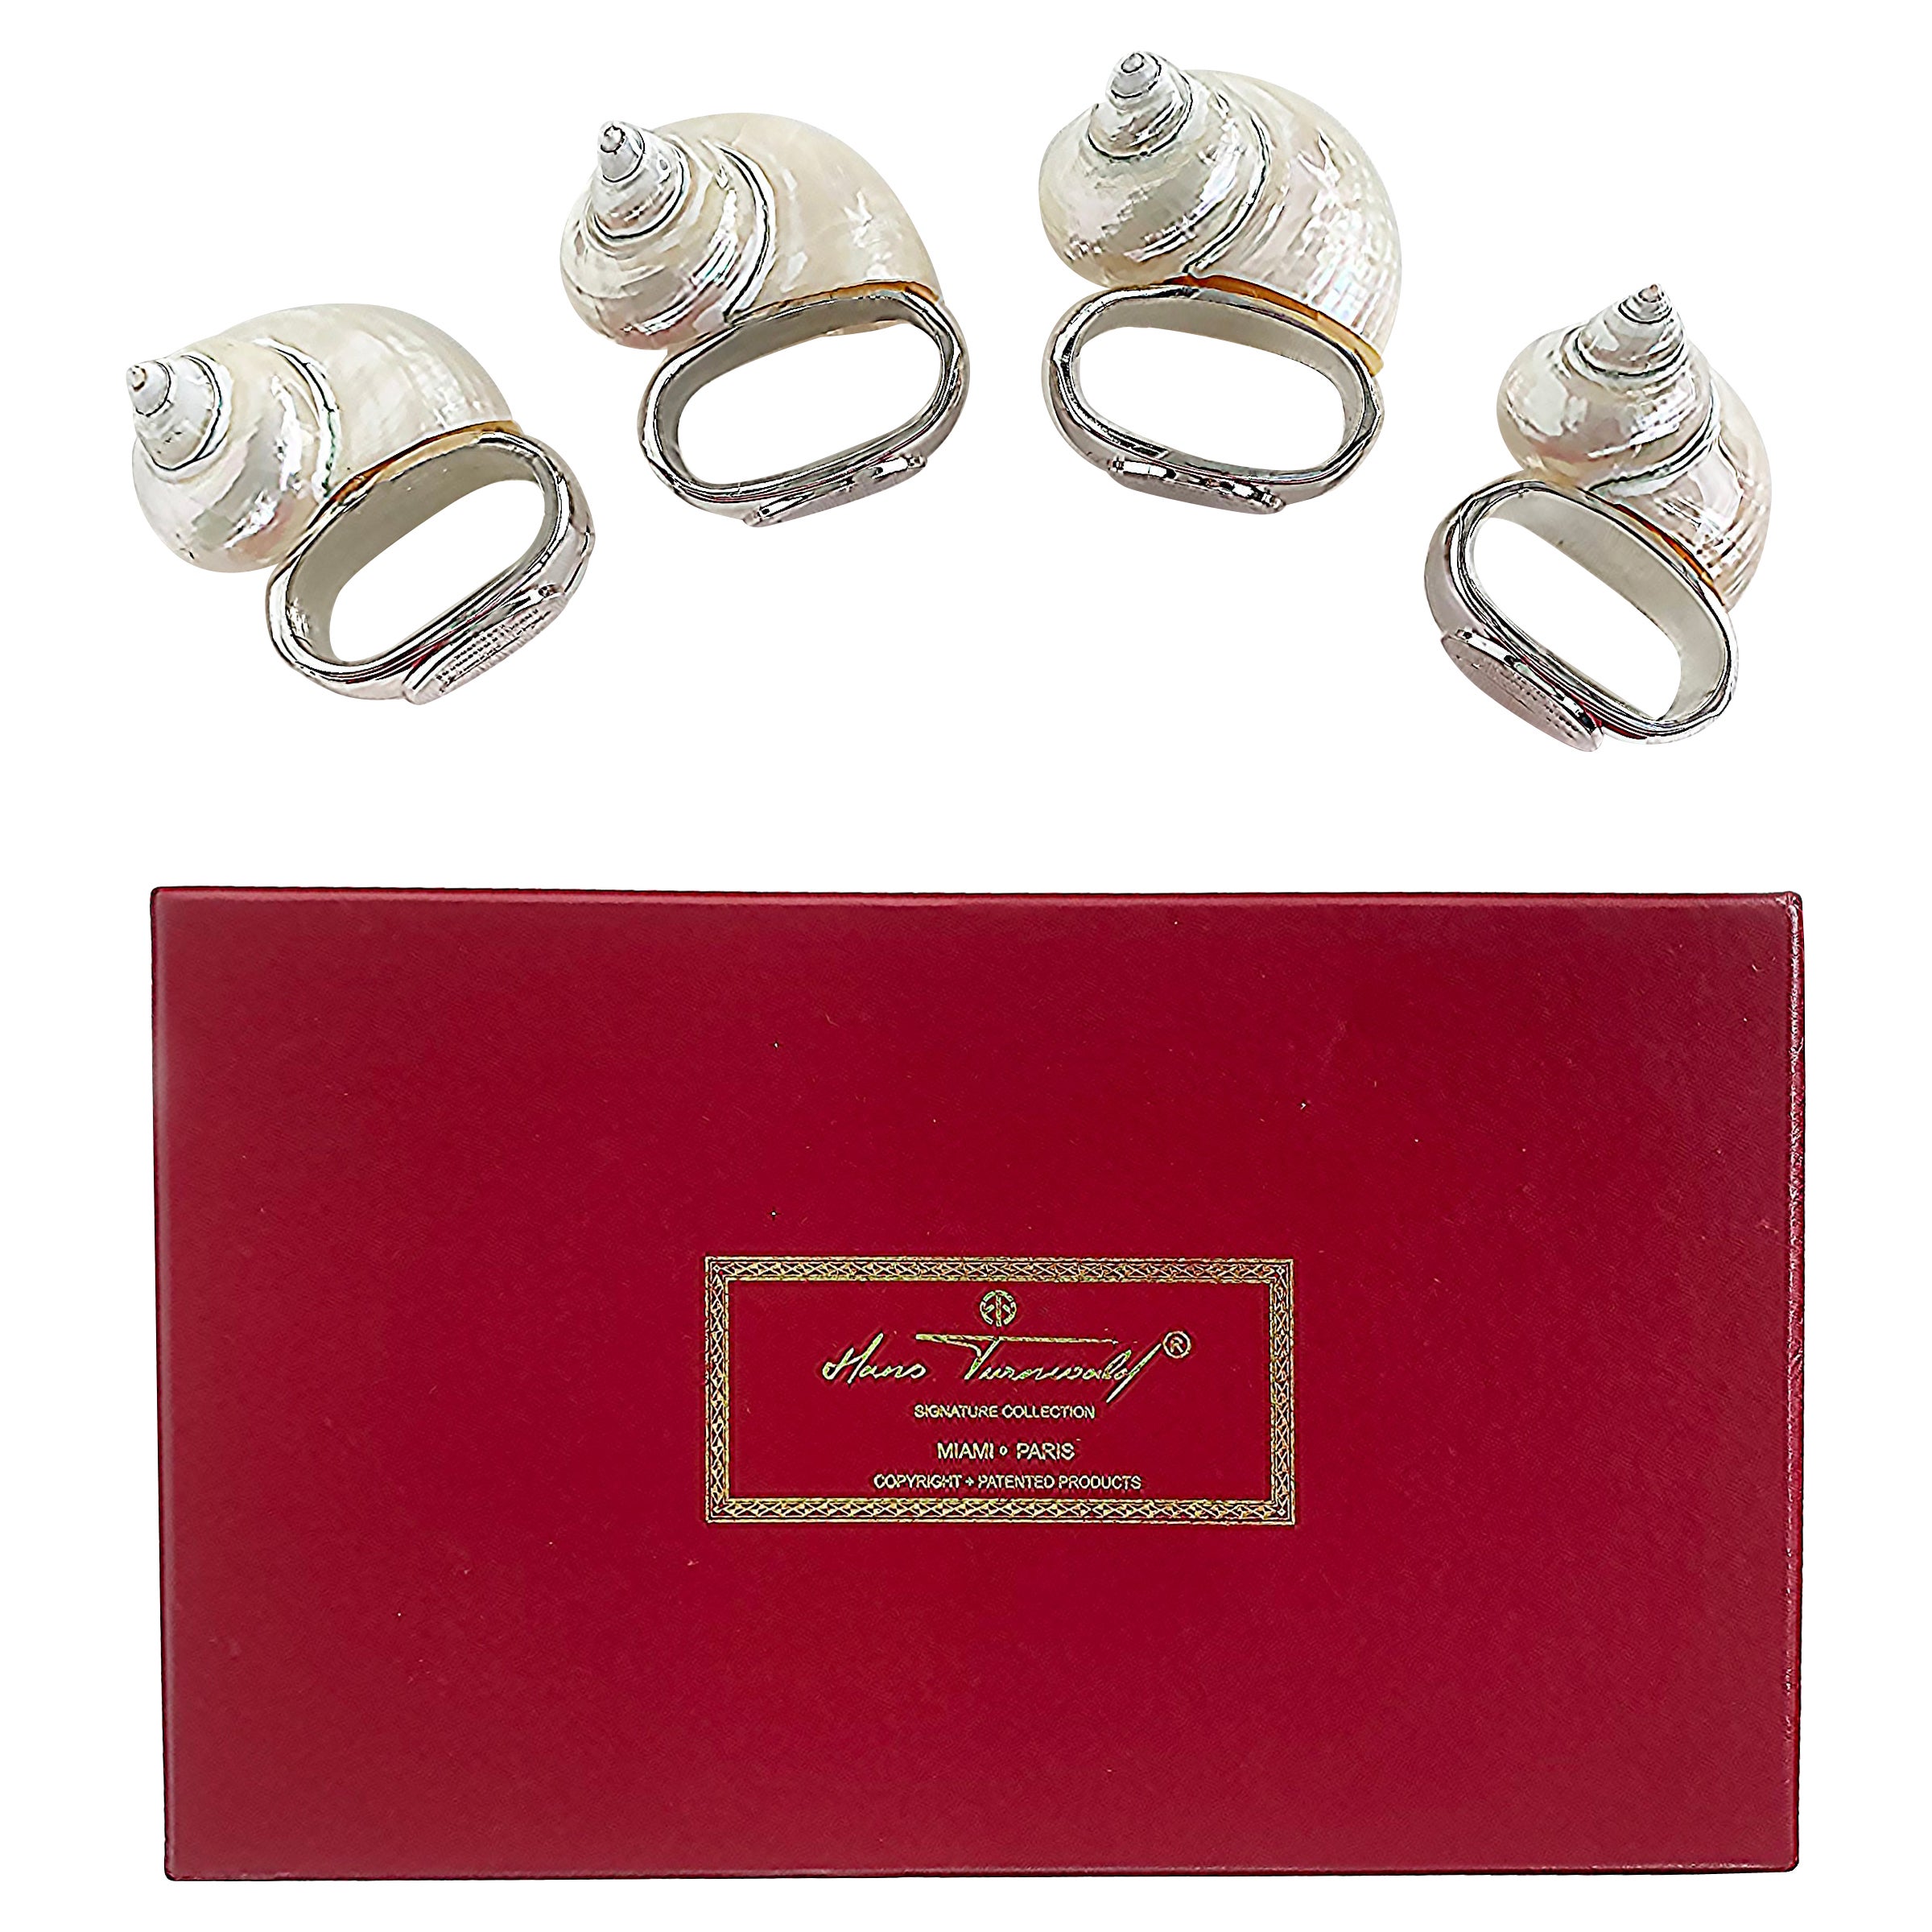 4 Hans Turnwald Sea Shell Silverplate Napkin Rings with Original Box